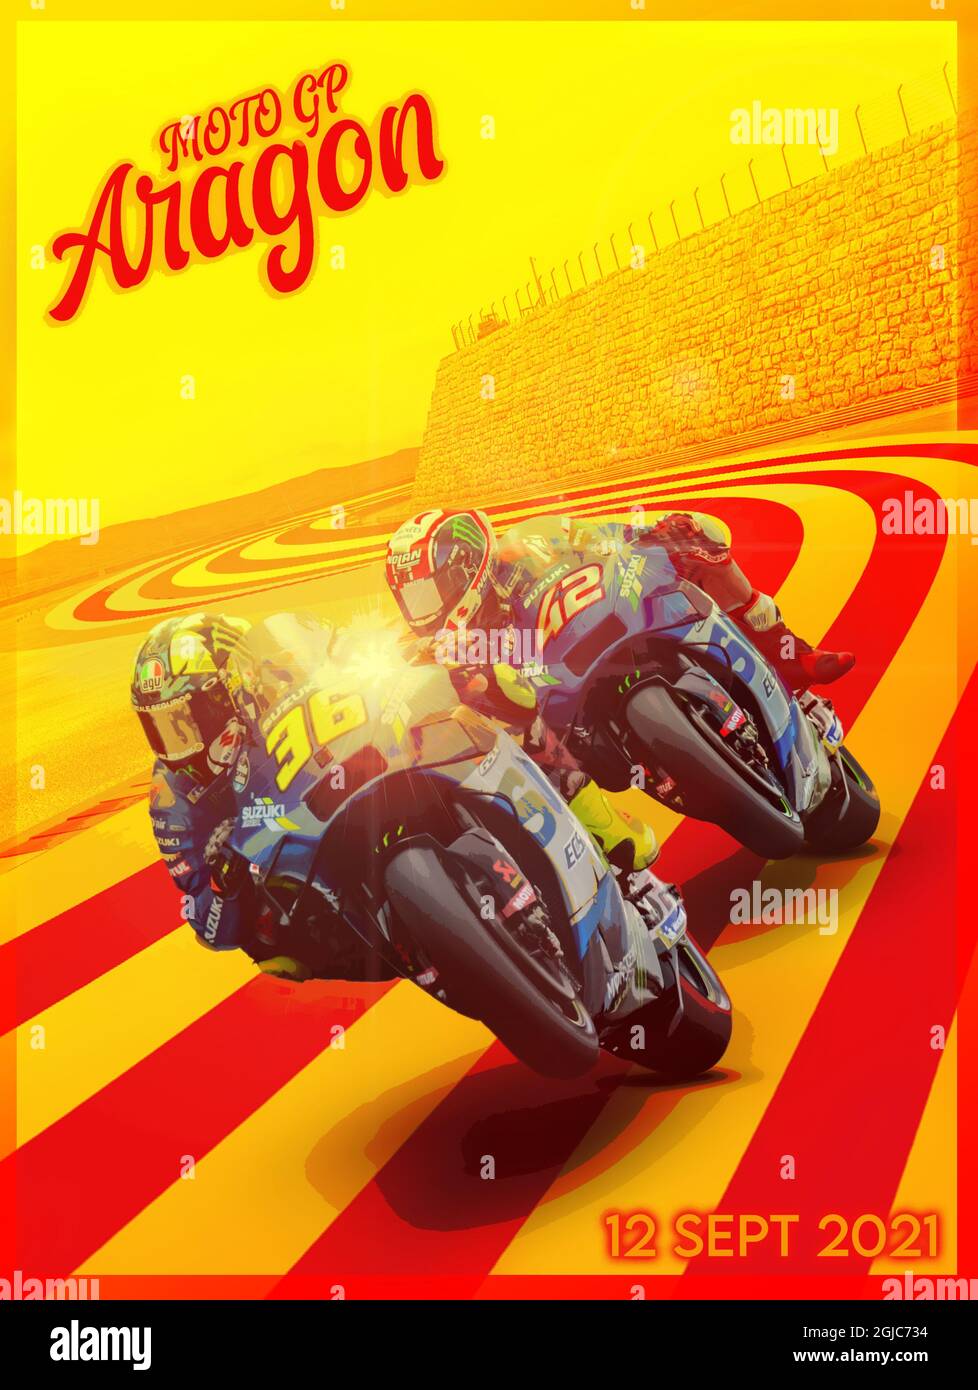 Aragon Moto GP Race Weekend Poster Stock Photo - Alamy